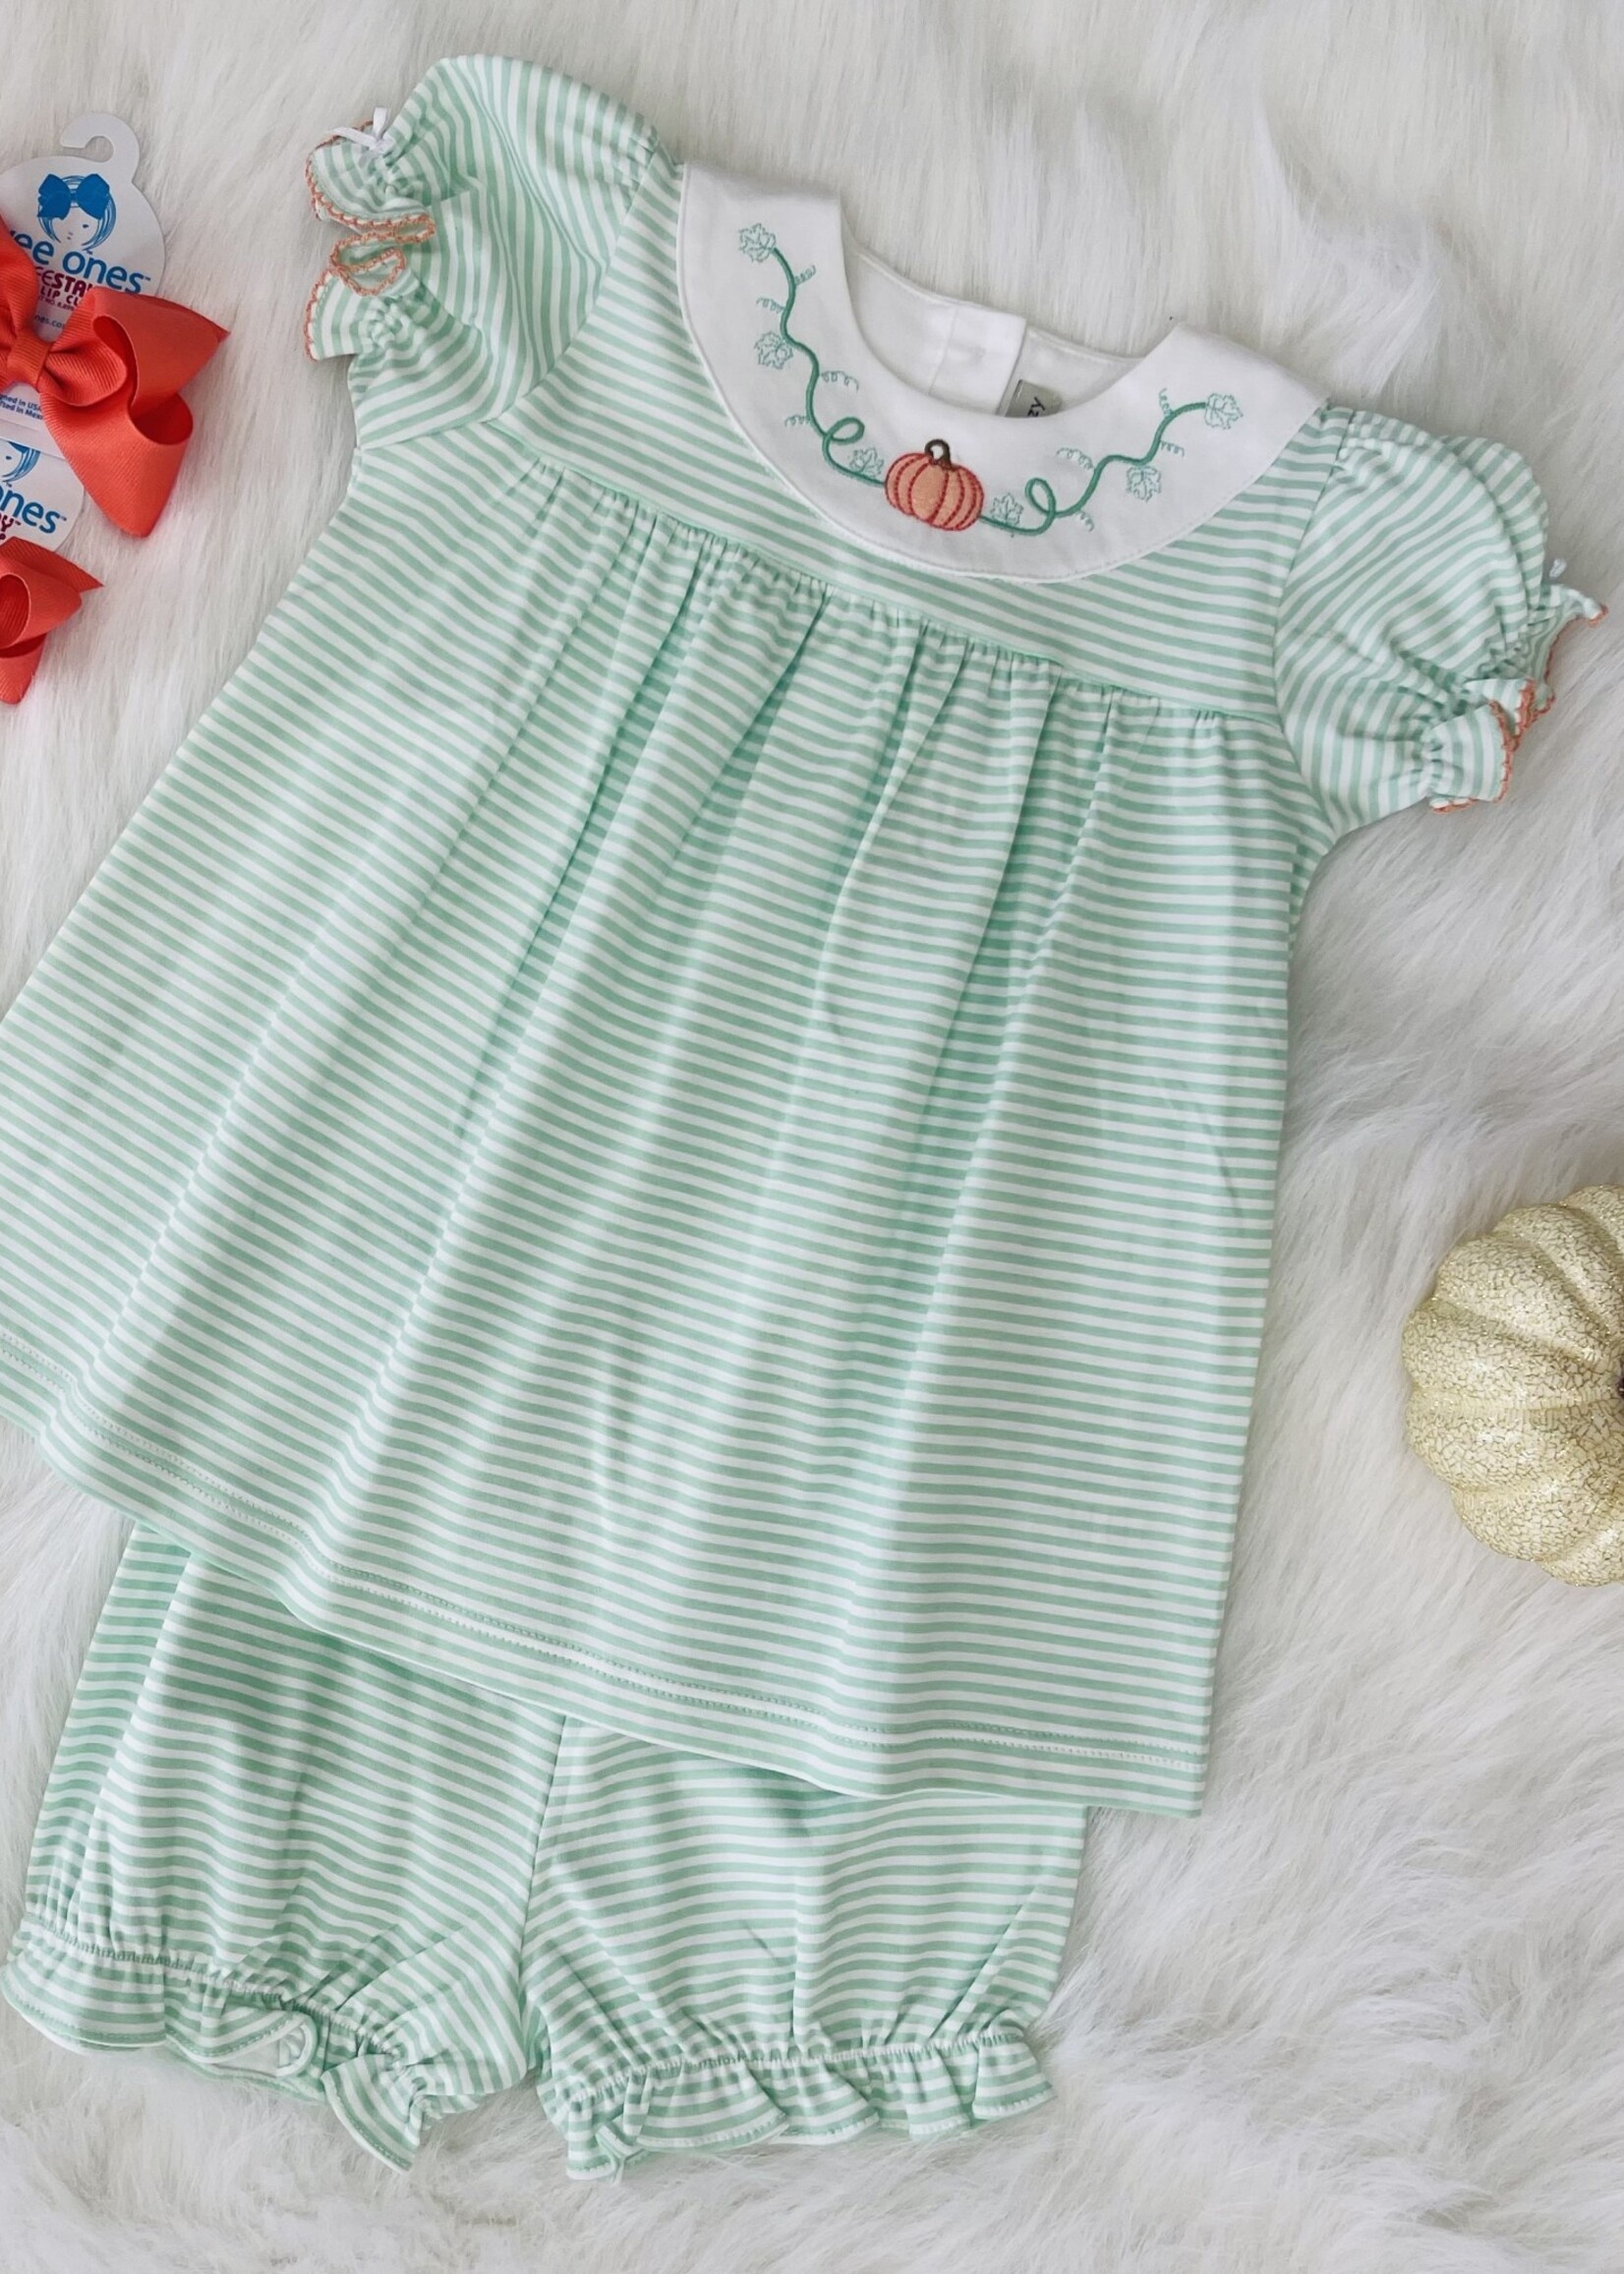 Pumpkin White/Lt. Green Striped Embroidery Dress